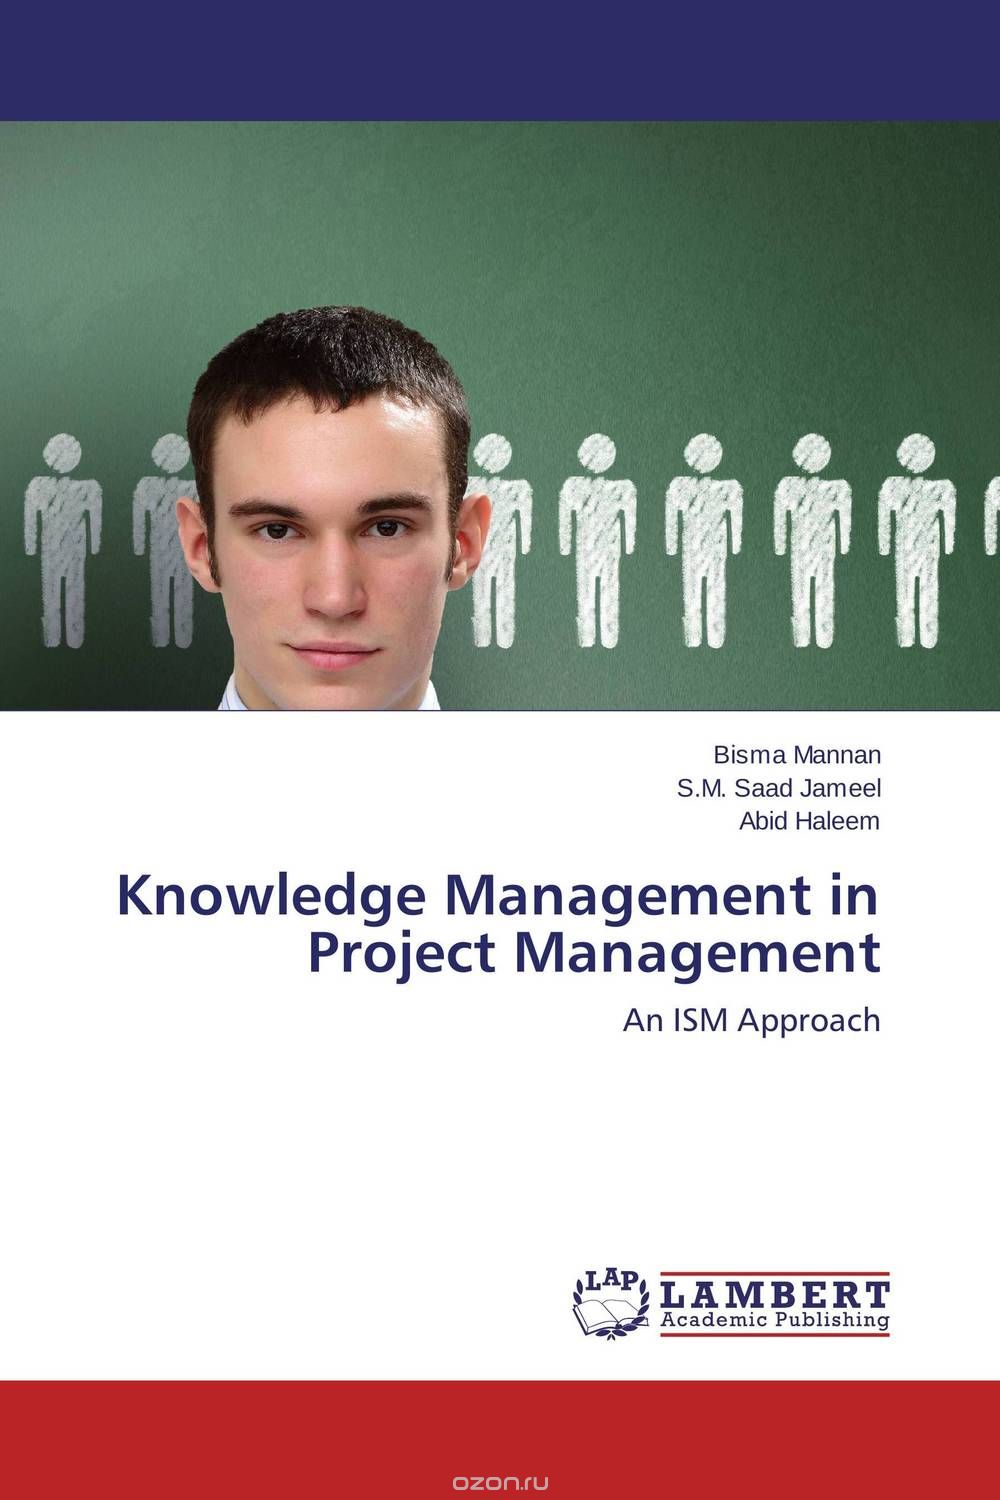 Скачать книгу "Knowledge Management in Project Management"